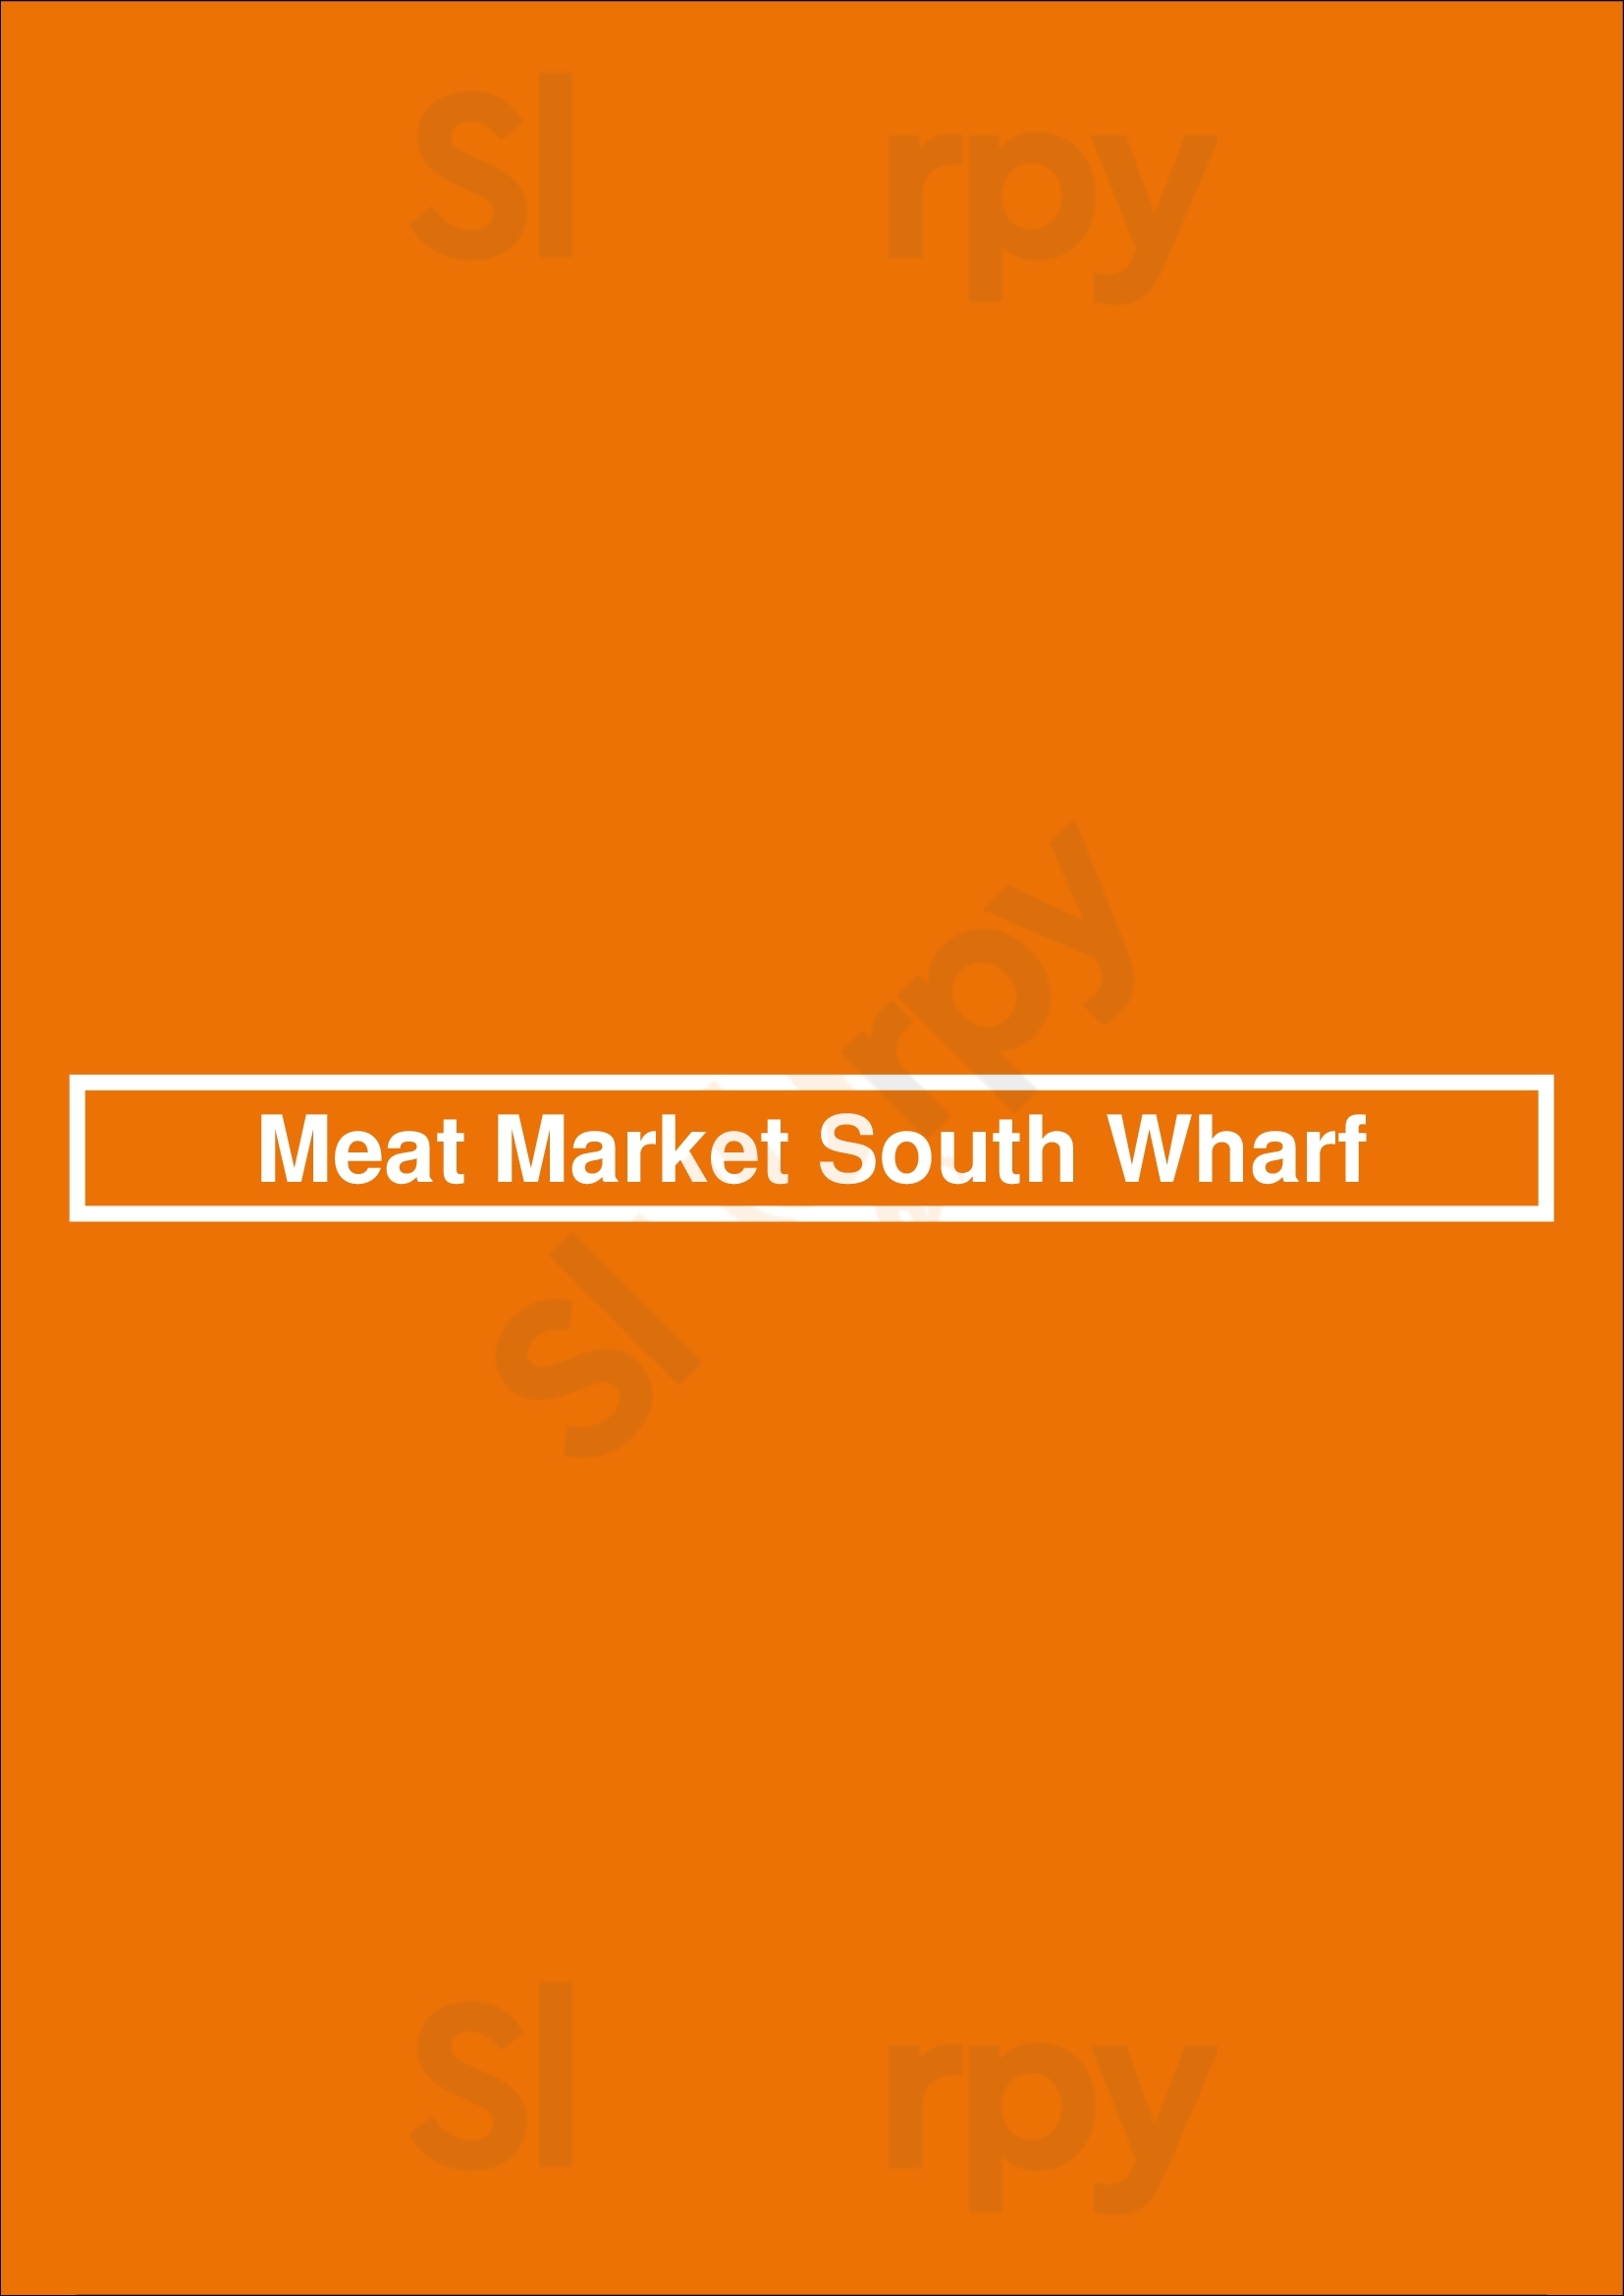 Meat Market South Wharf Melbourne Menu - 1